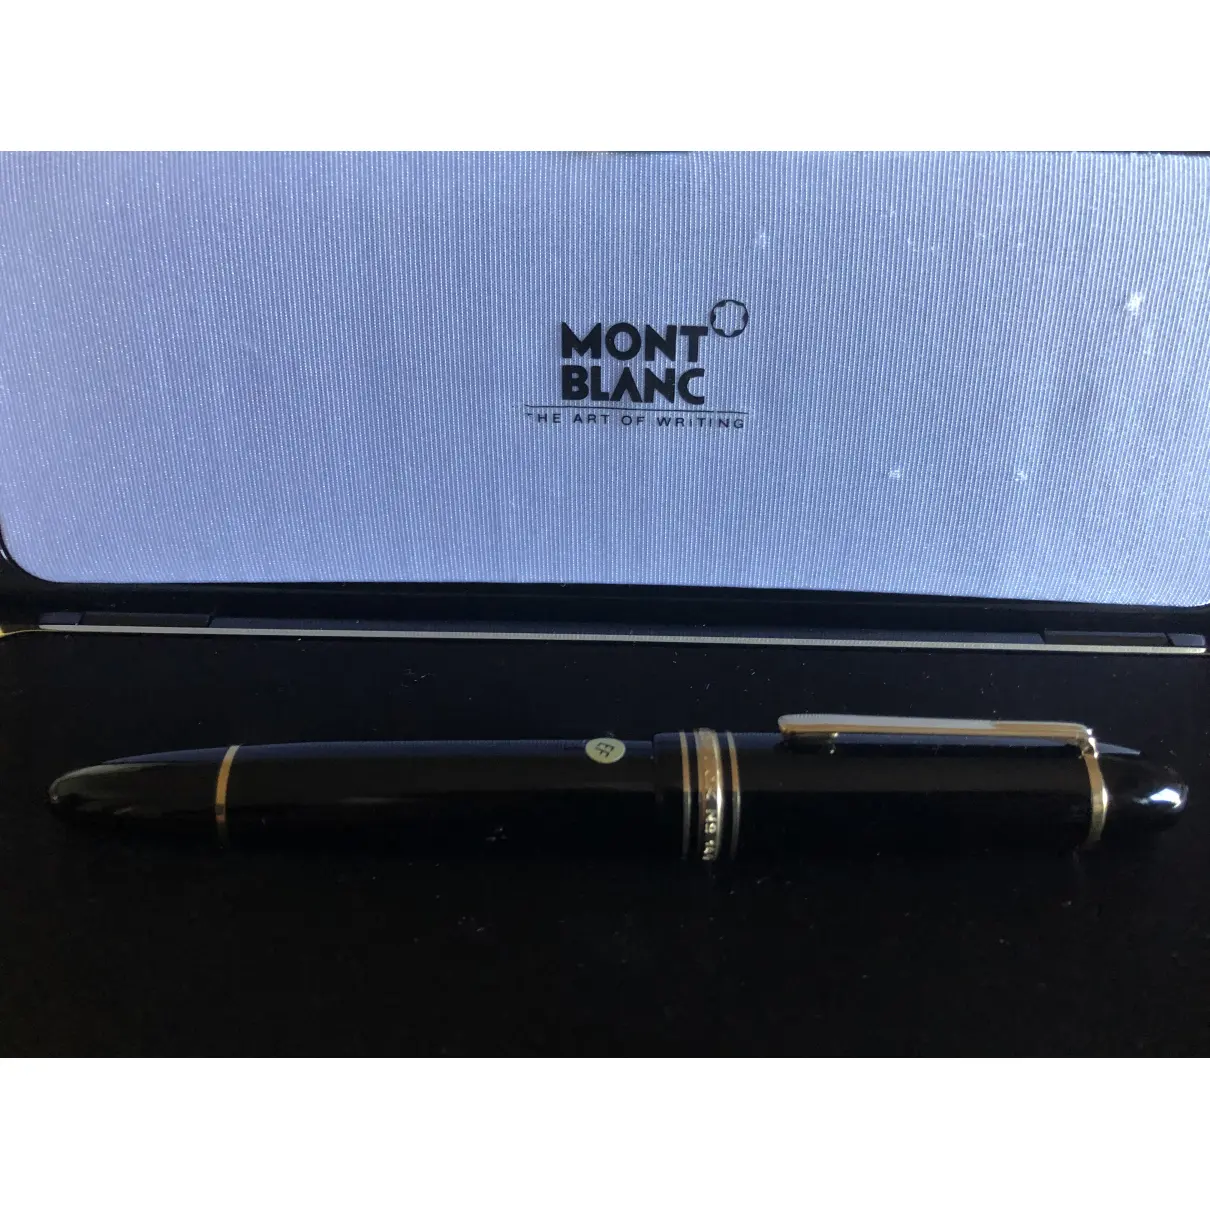 Buy Montblanc Pen online - Vintage